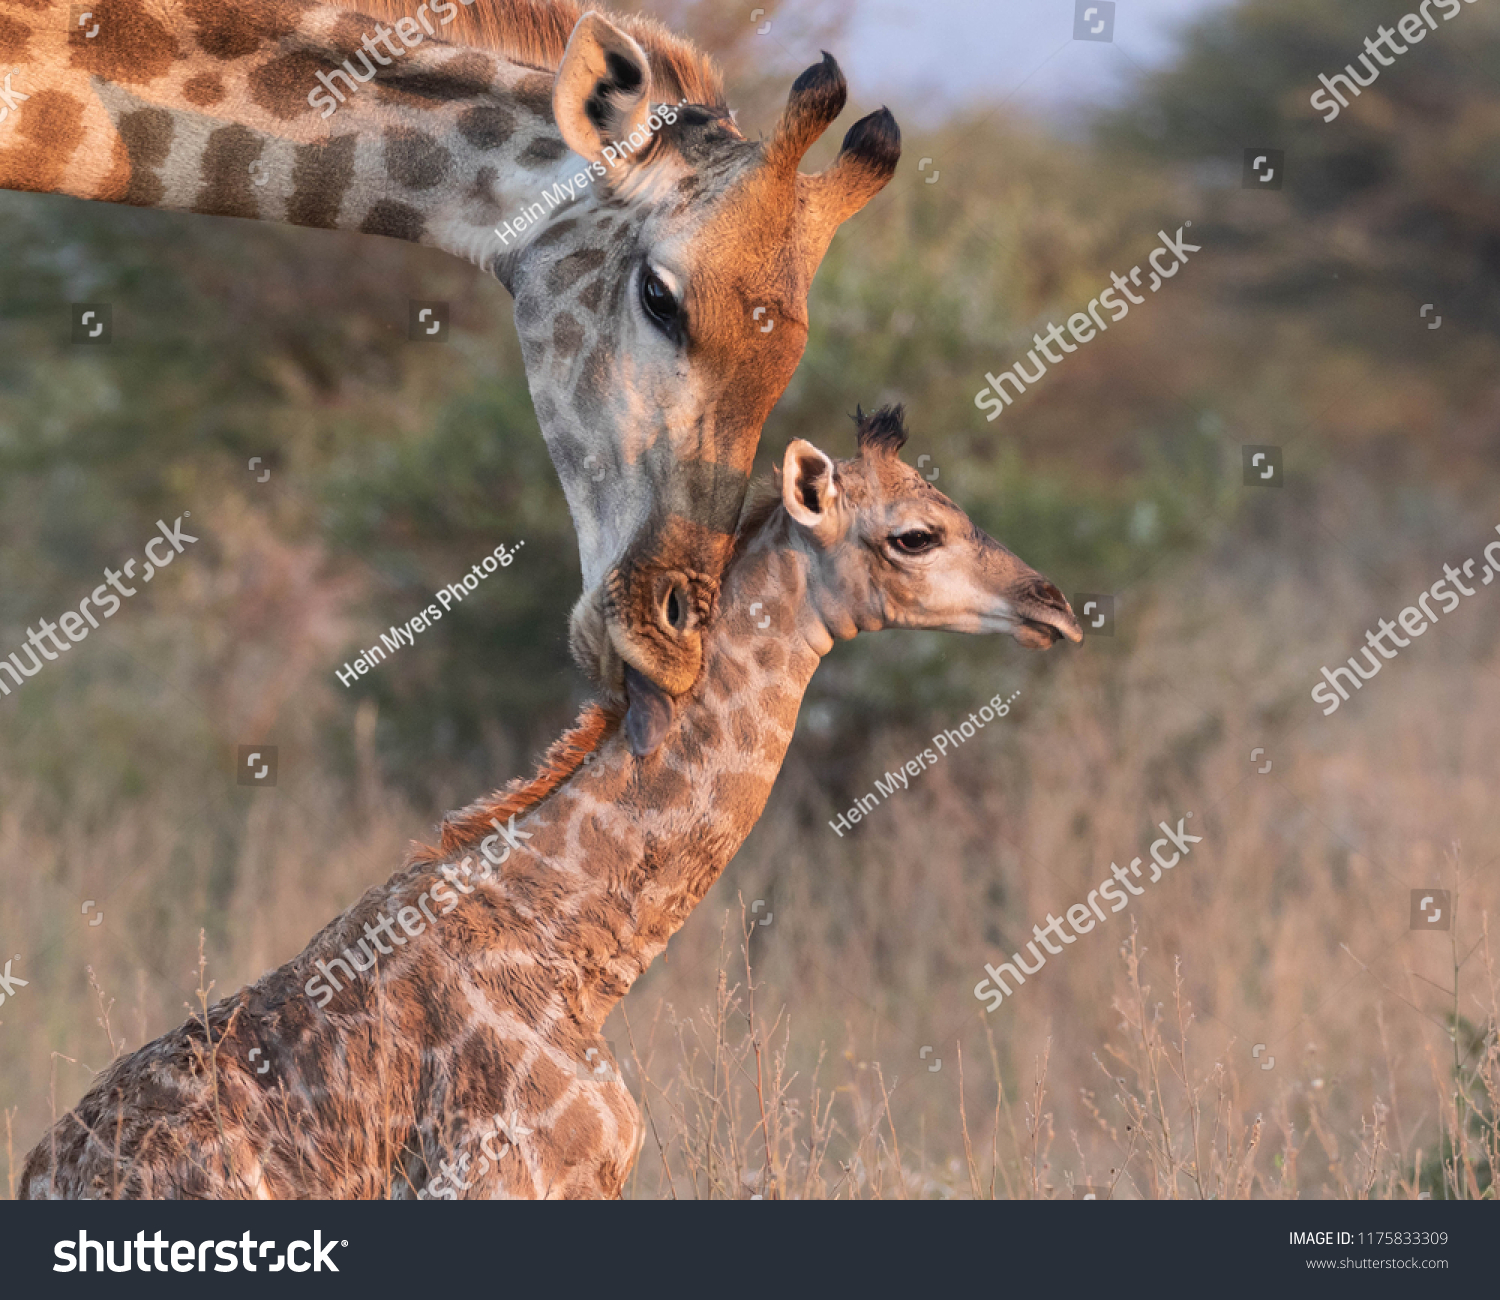 New born Giraffe #1175833309